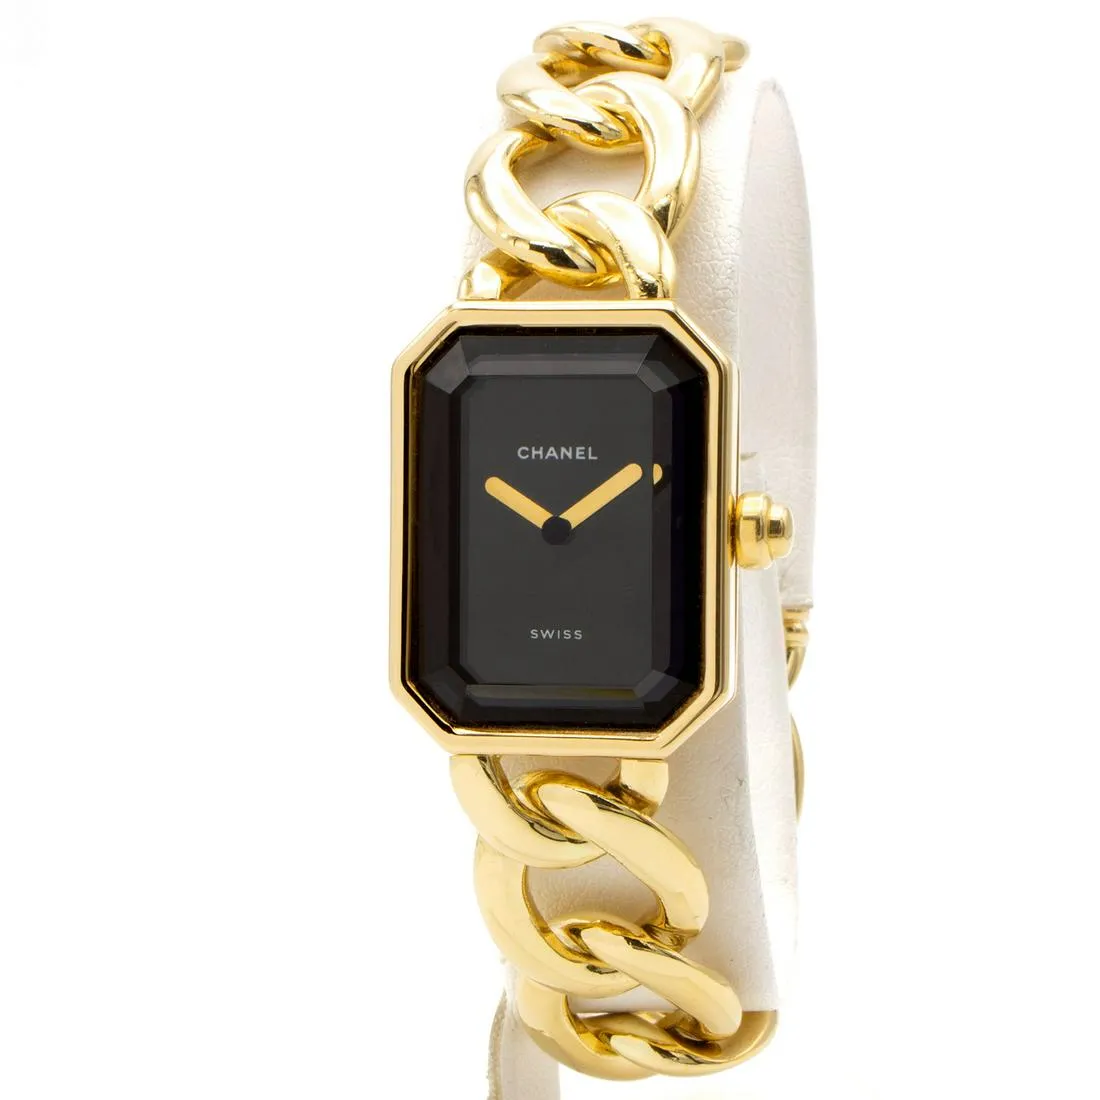 Chanel Premiere Chaine wristwatch on an 18K gold link chain, est. $8,000-$10,000